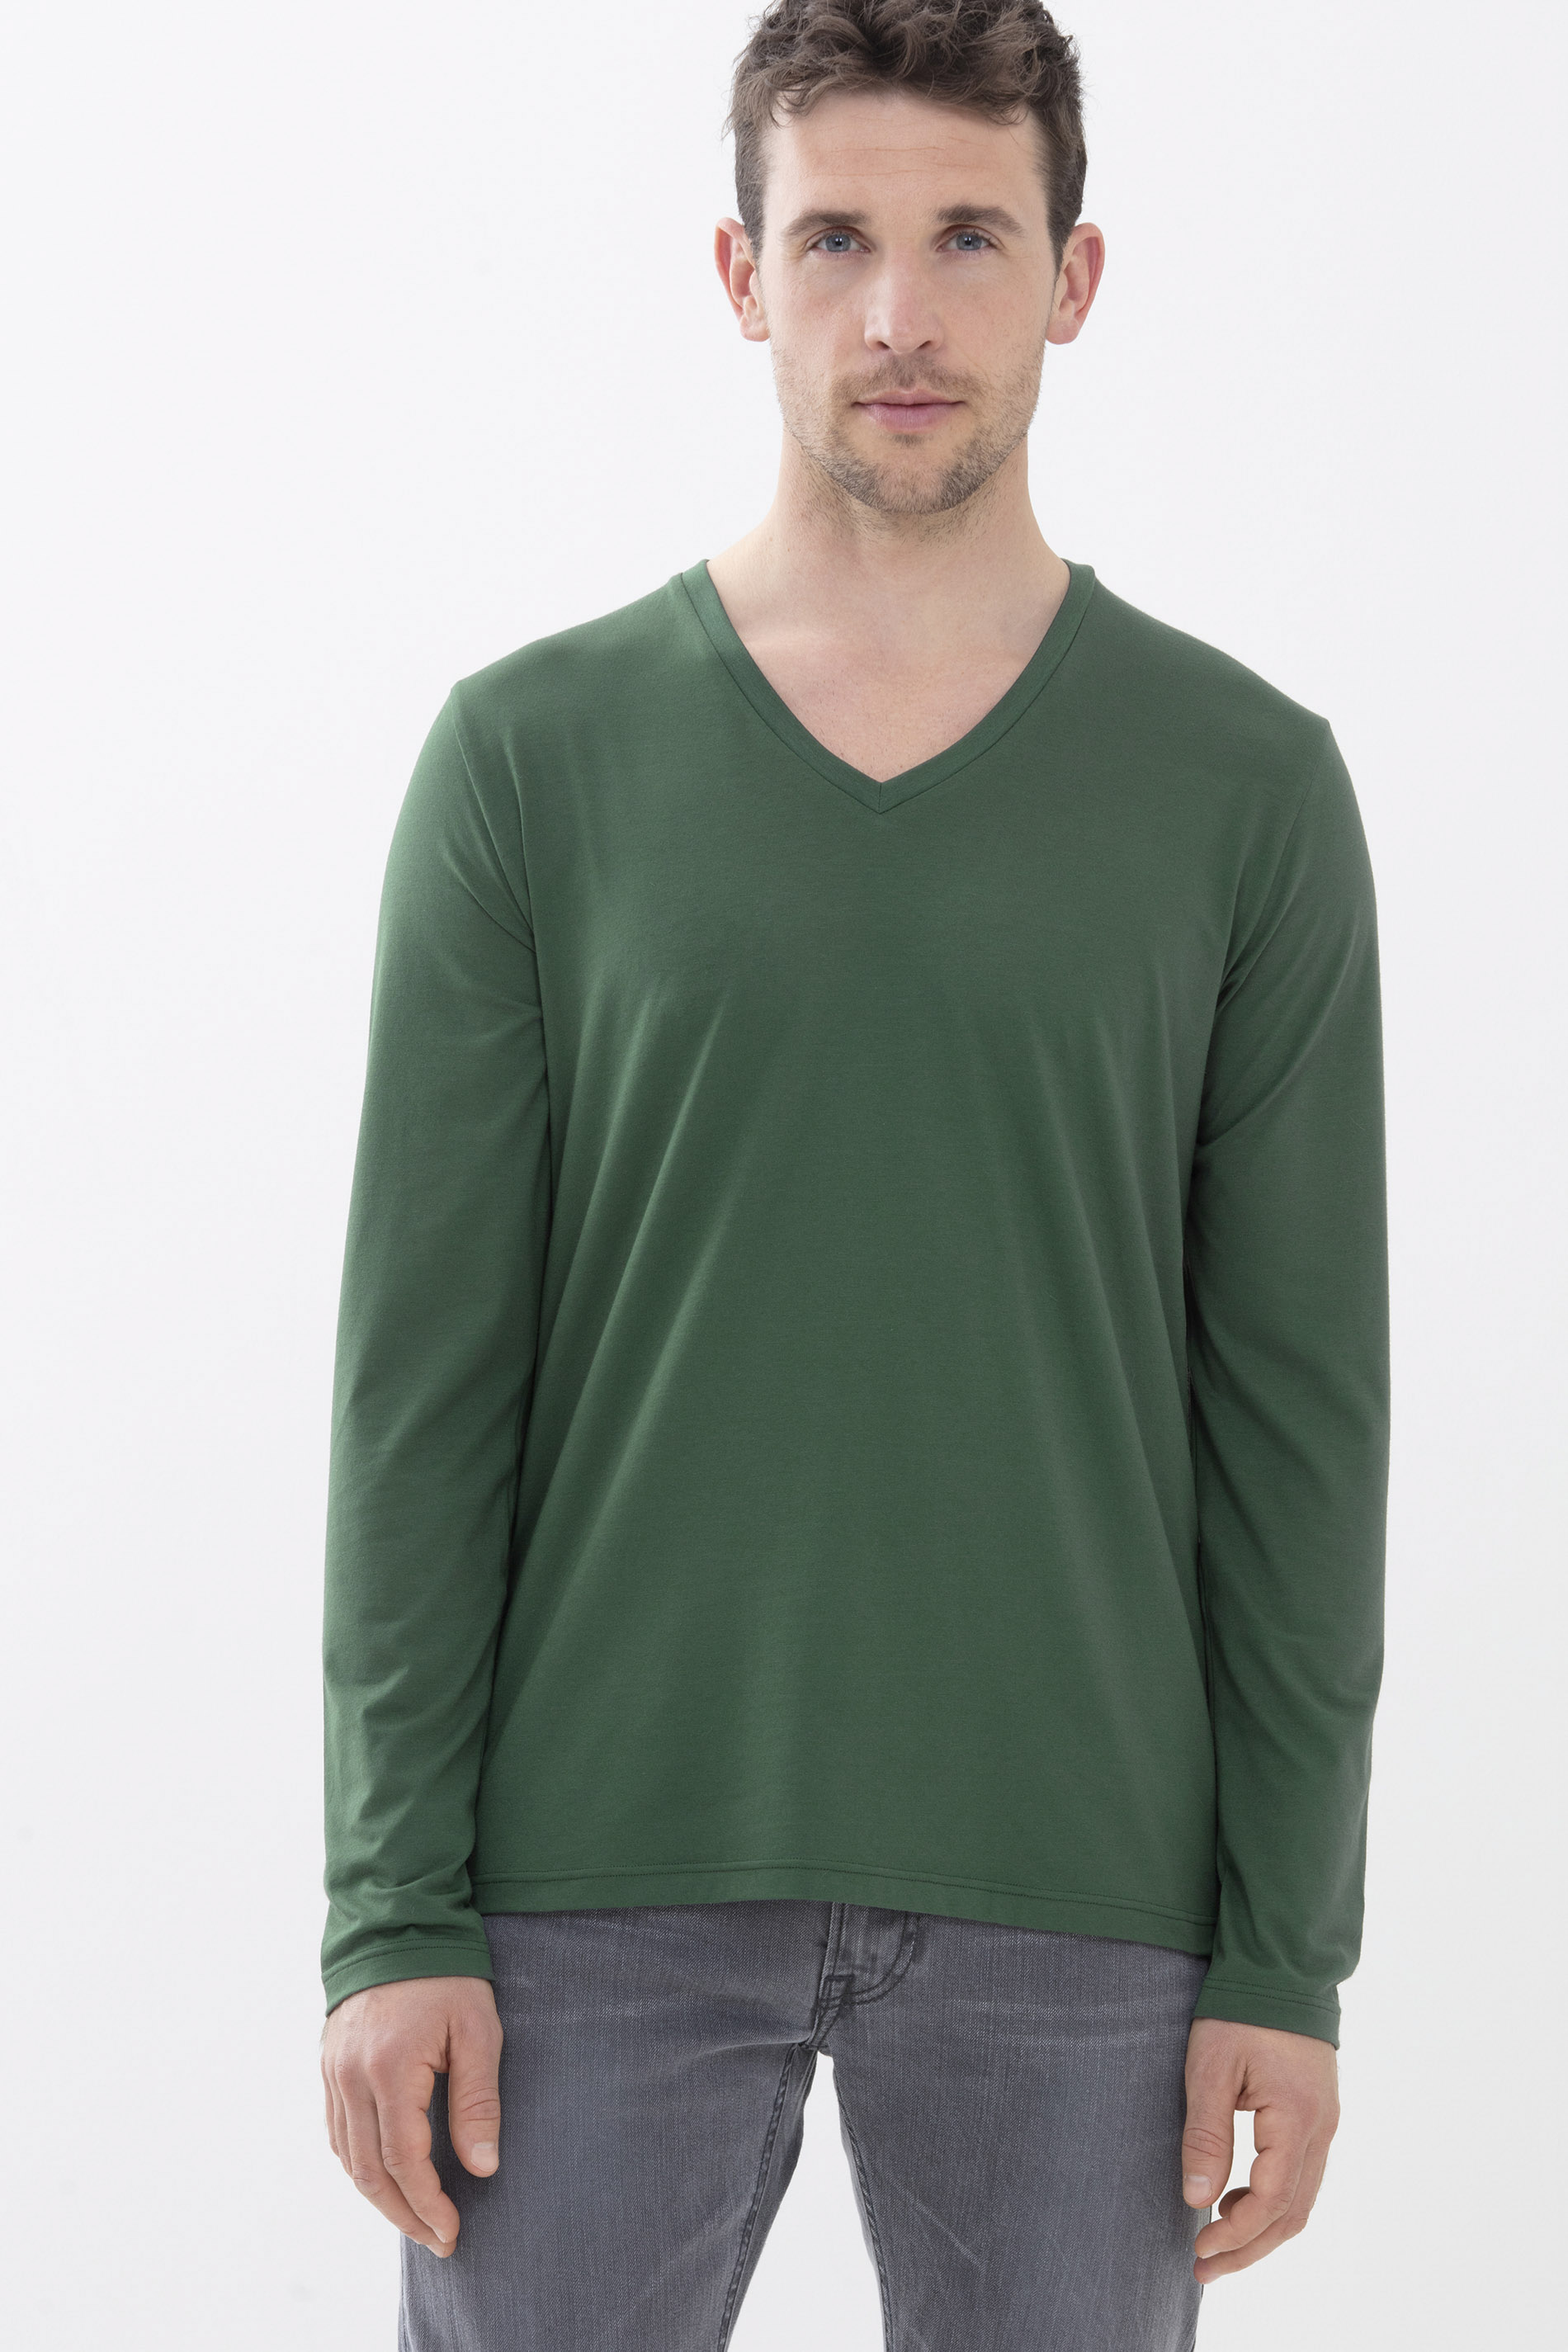 Langarm-Shirt Evergreen Dry Cotton Colour Frontansicht | mey®